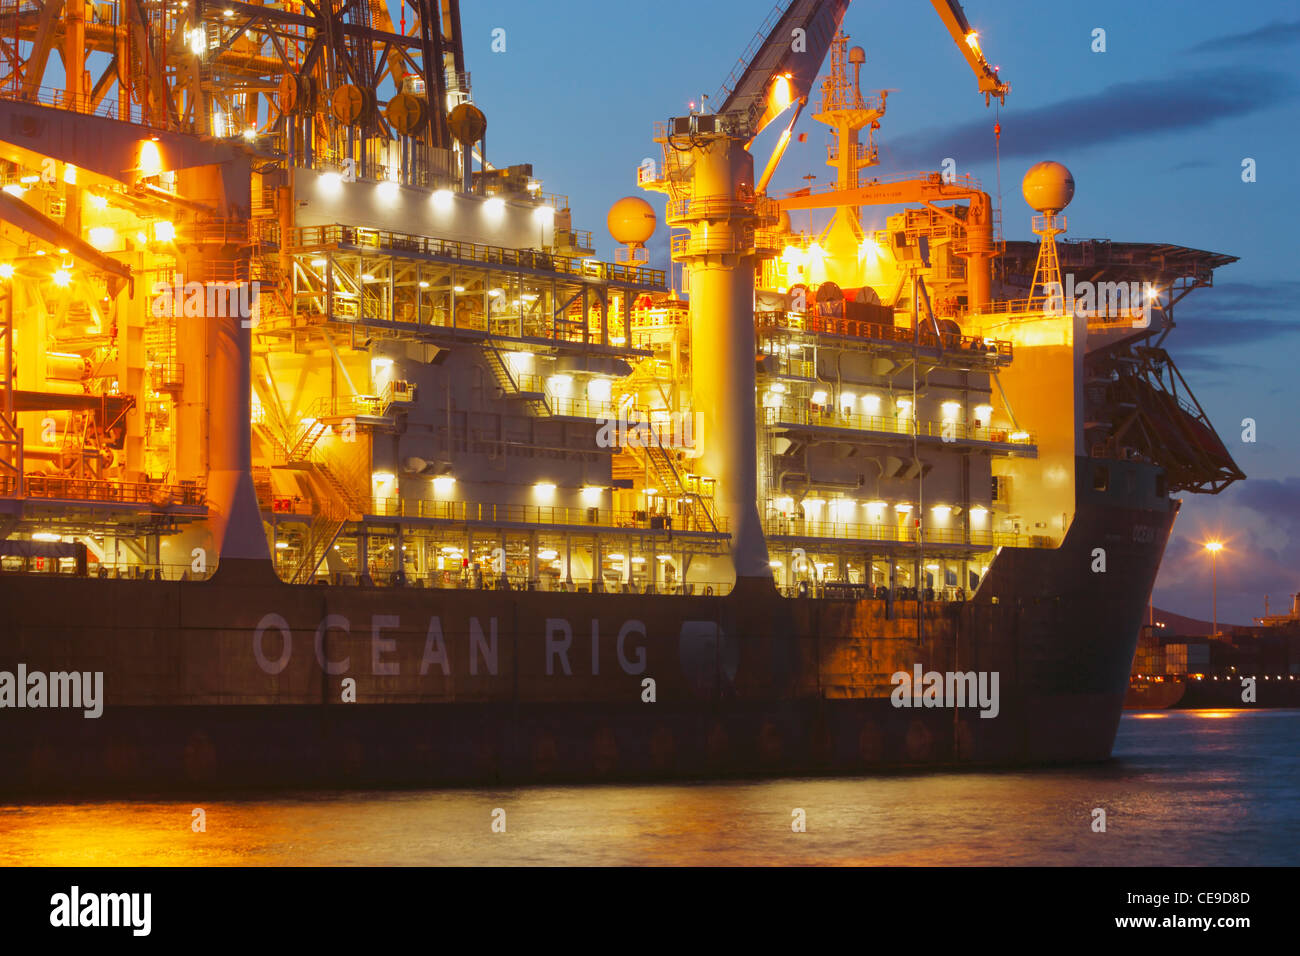 Ocean Rig Corcovado drillship, drill ship,drilling ship at night. Stock Photo